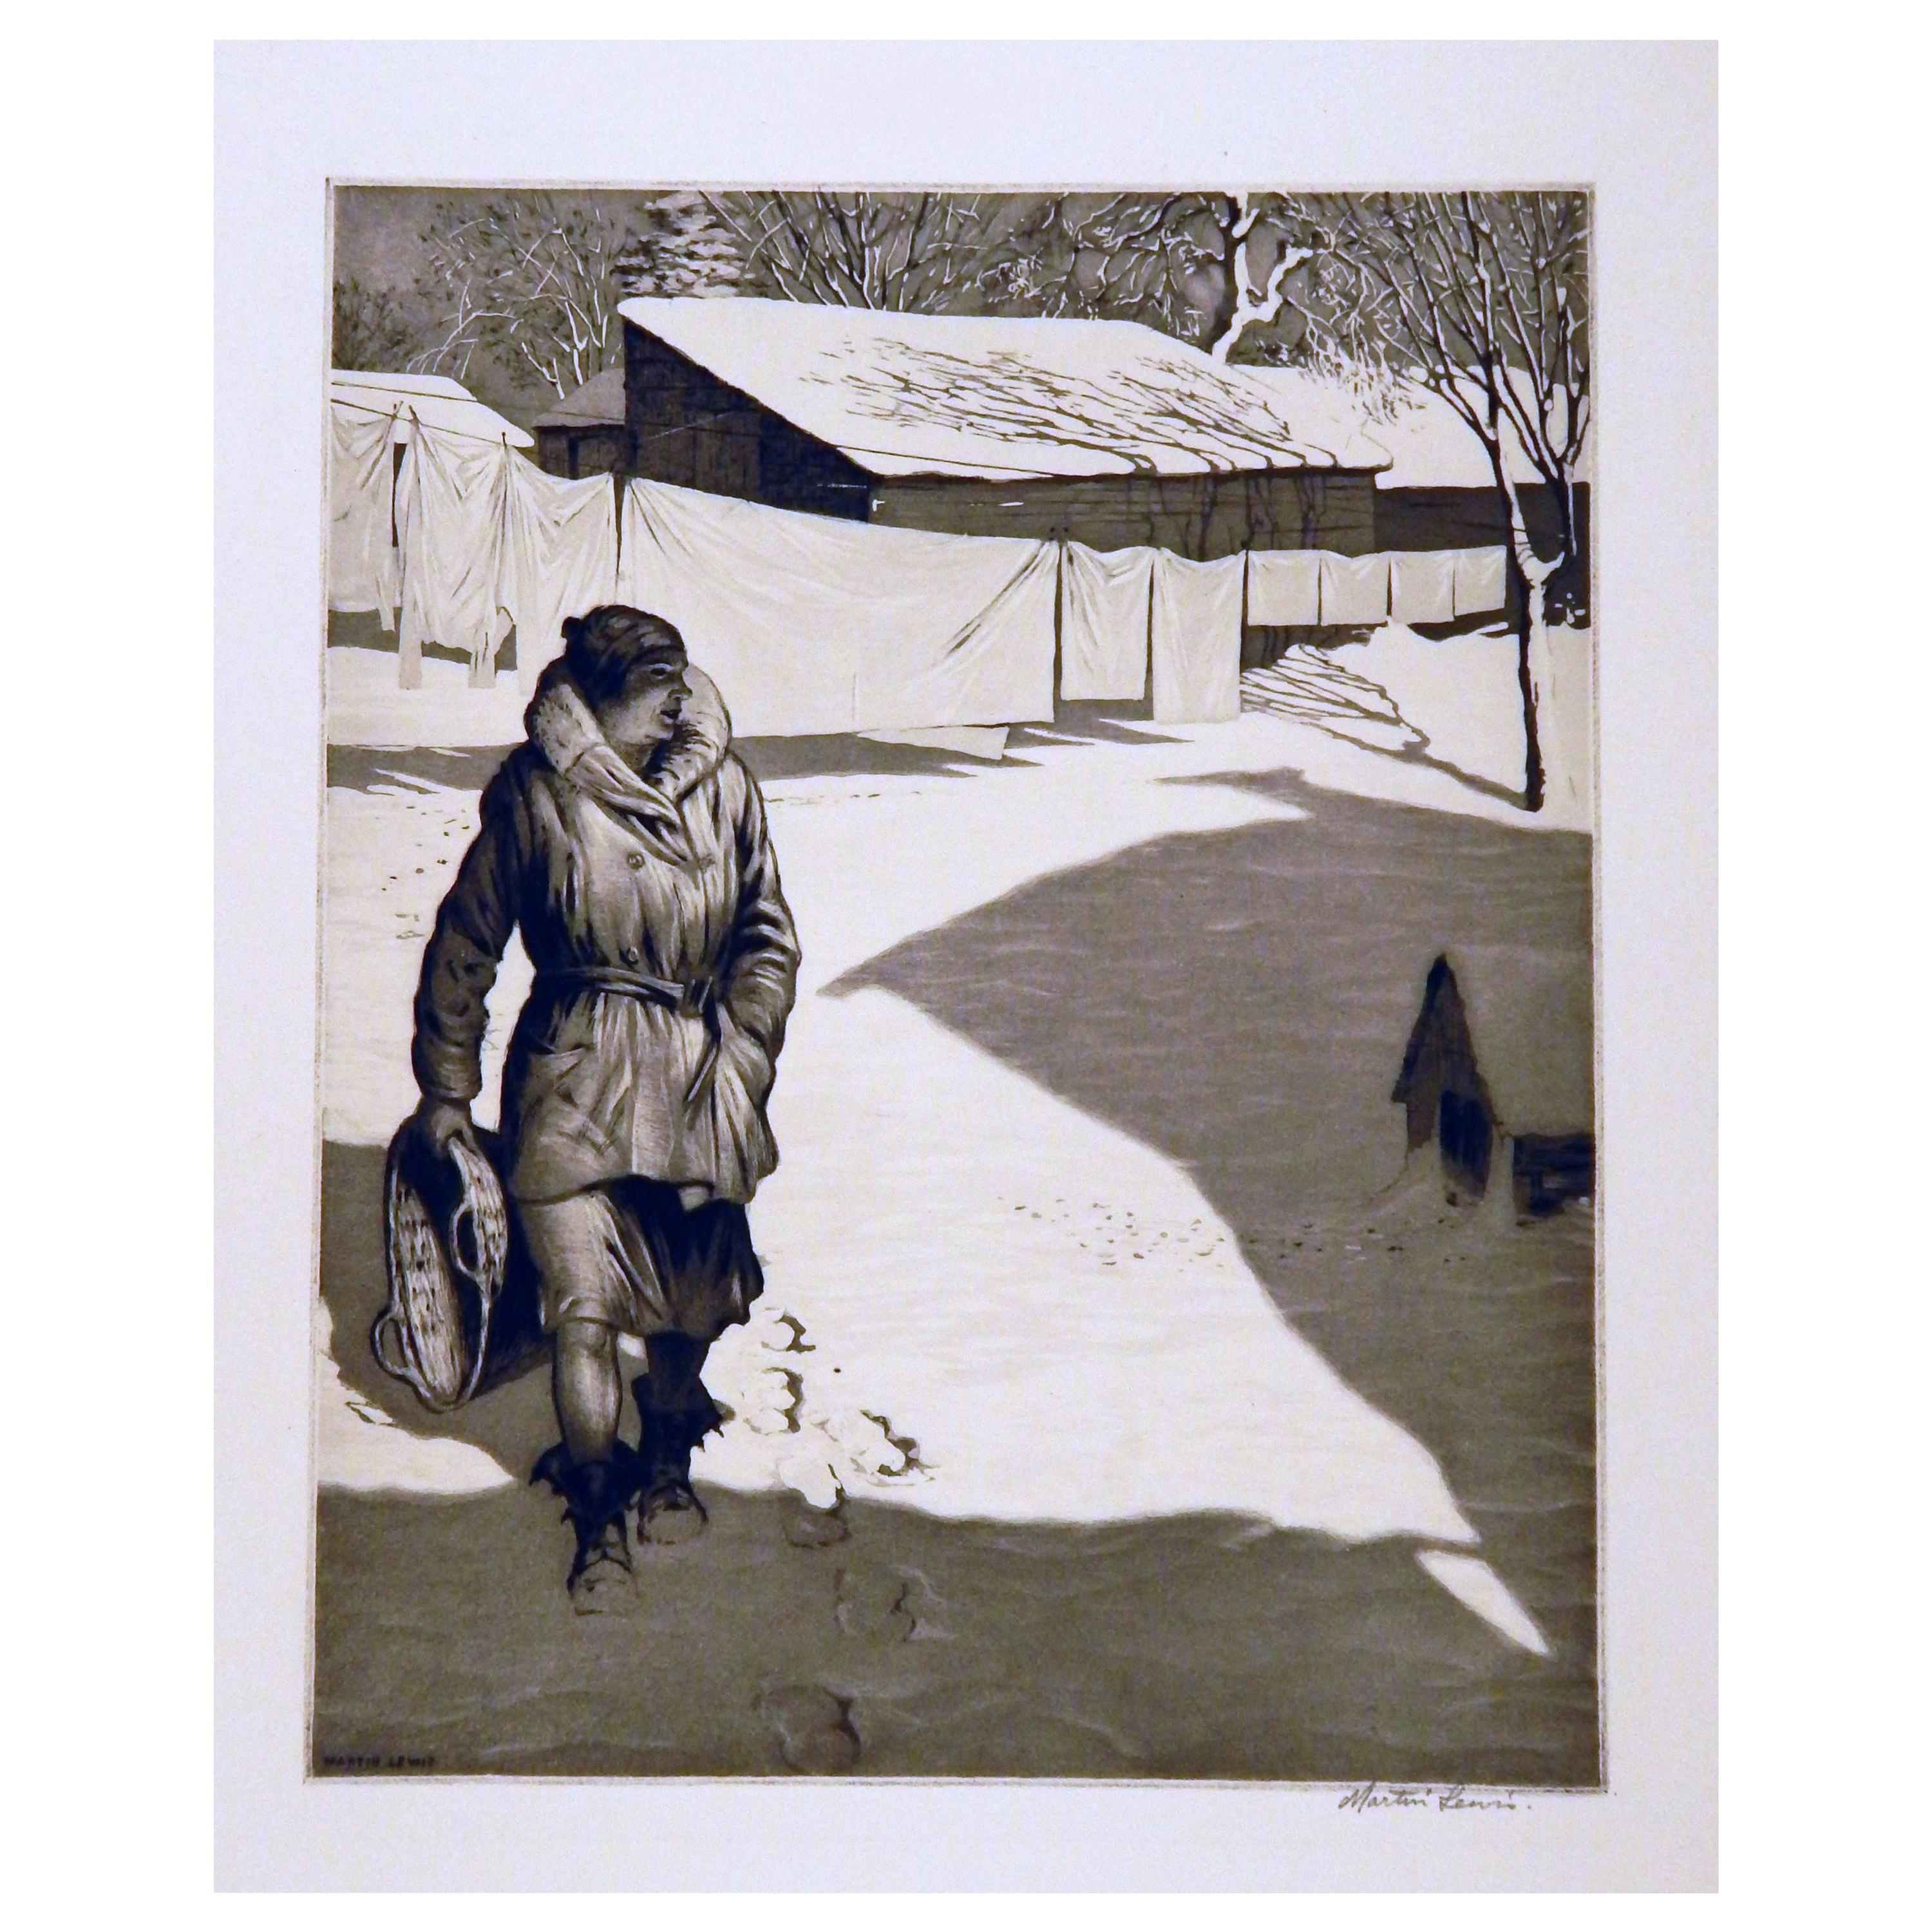 Martin Lewis 20th Century Master Printmaker, Etching, 1932 "White Monday"